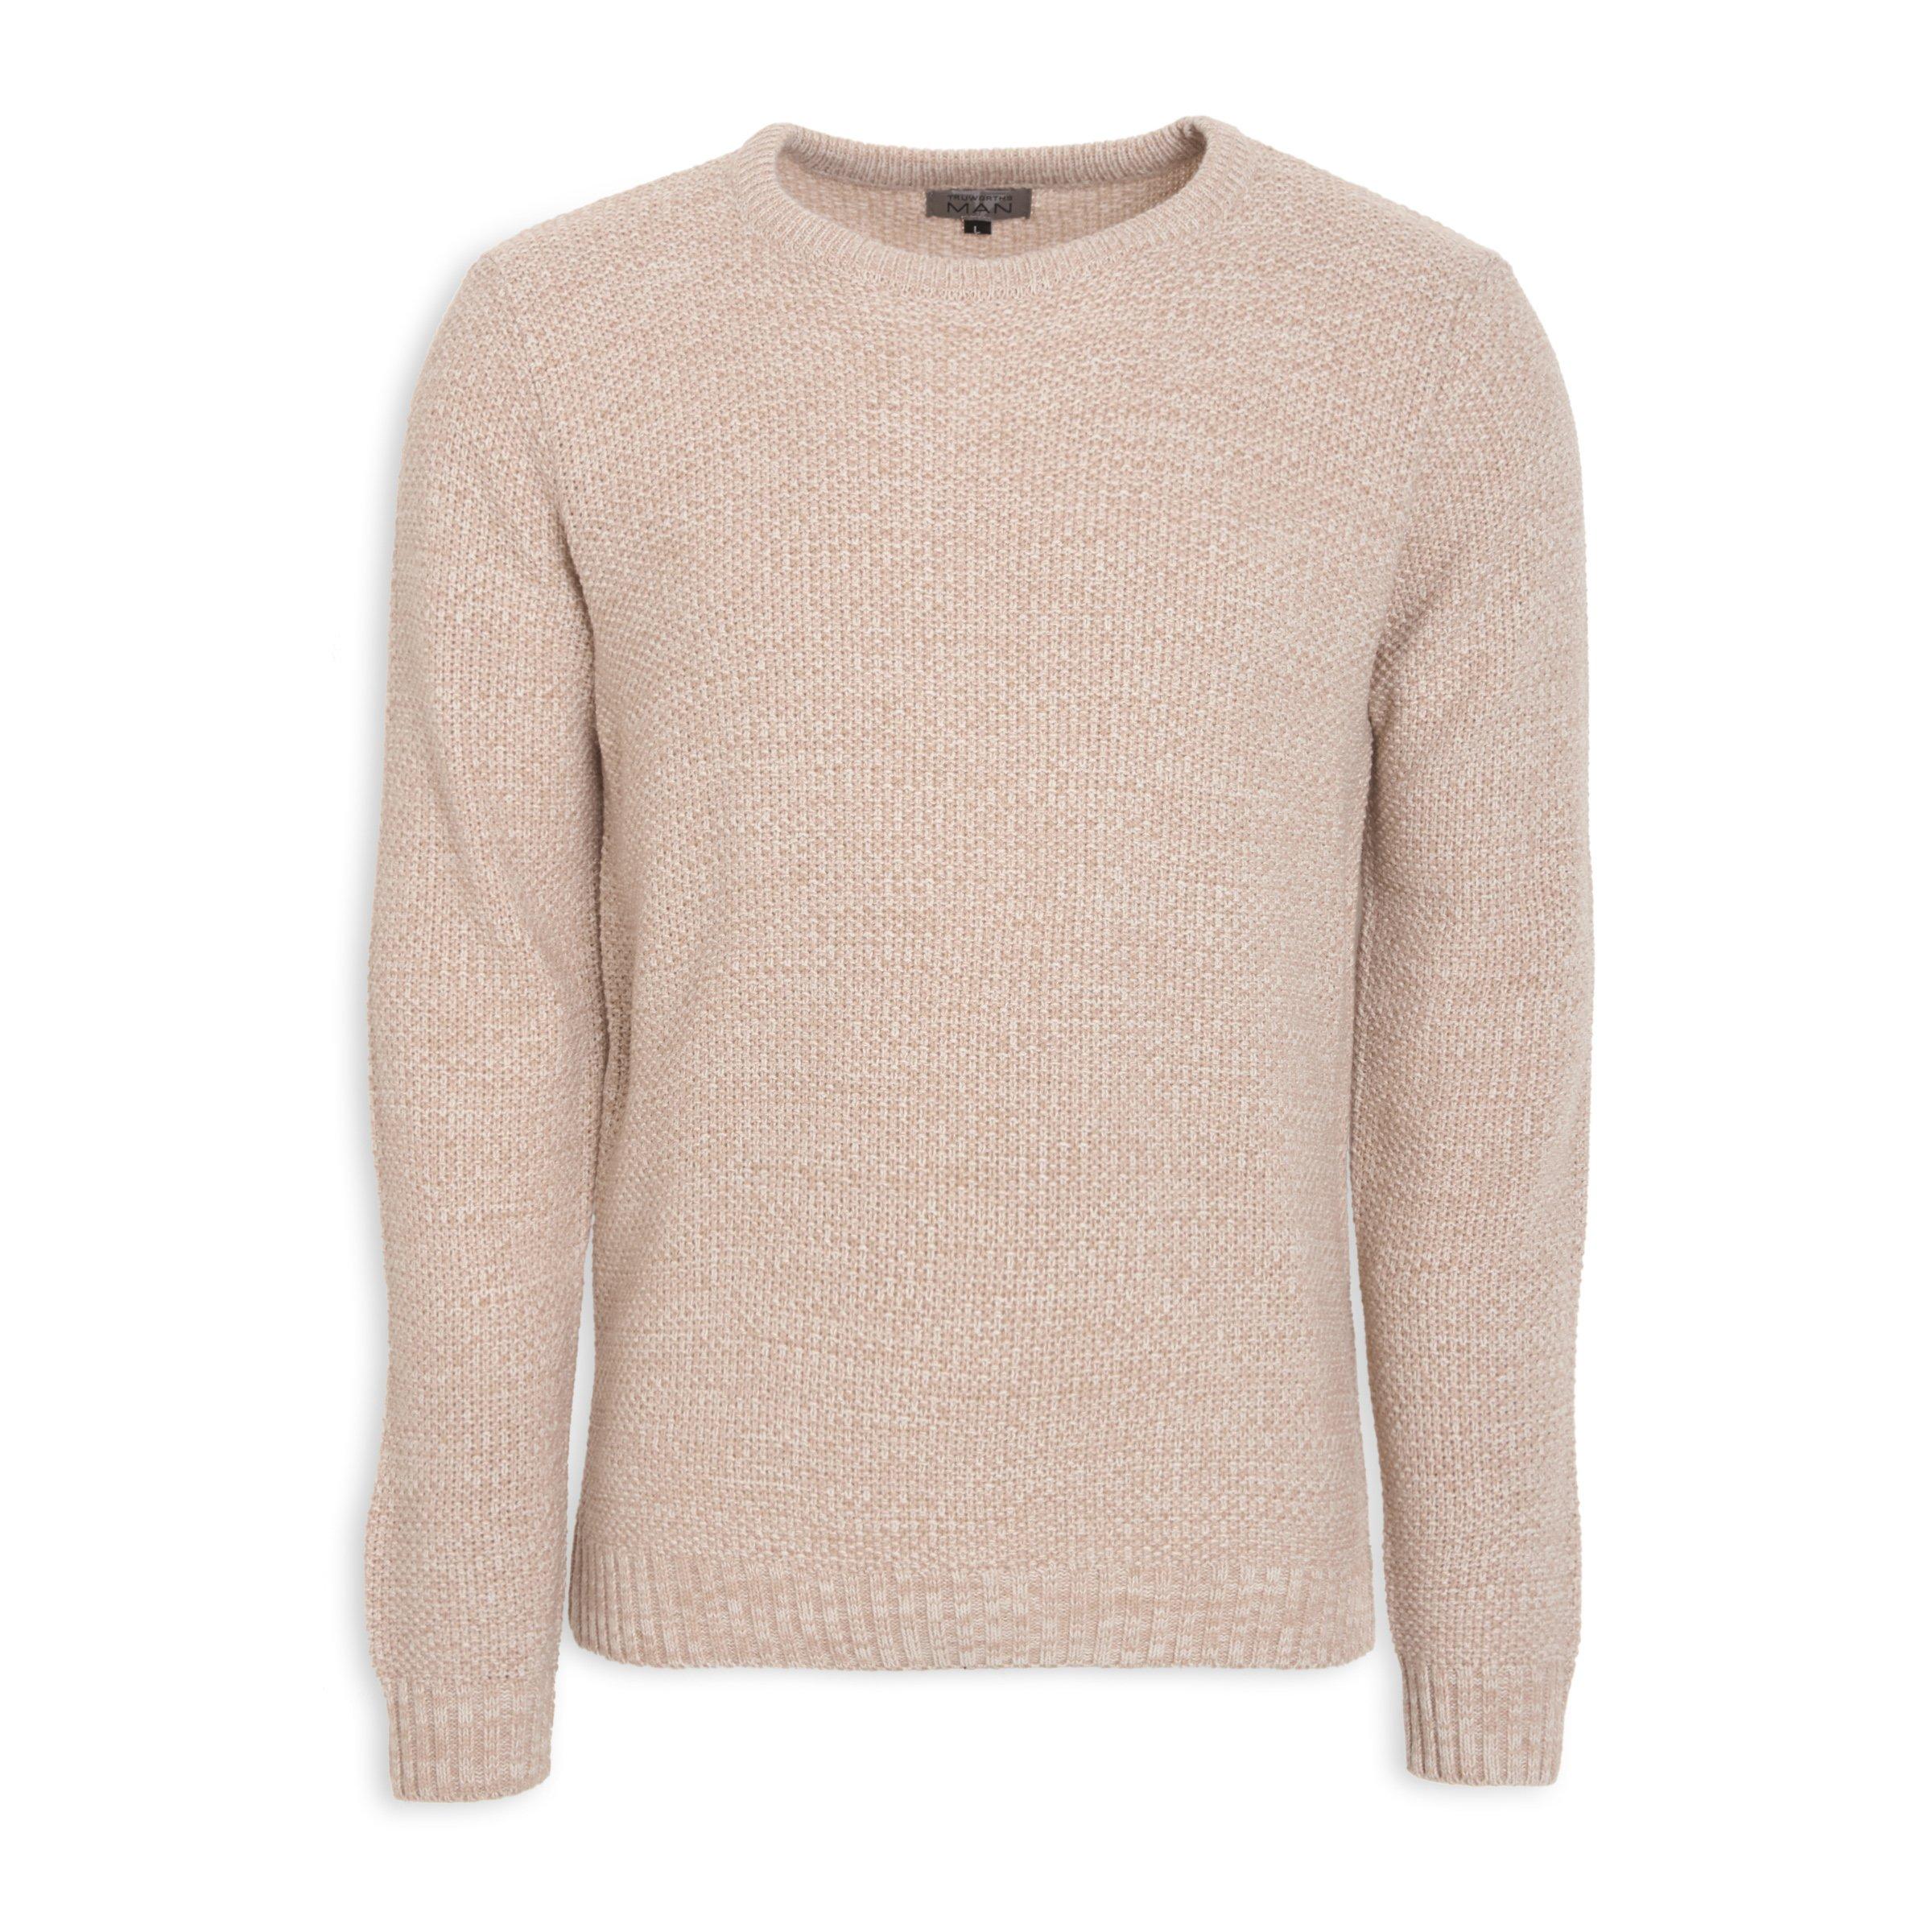 Buy Truworths Man Stone Knit Sweater Online | Truworths